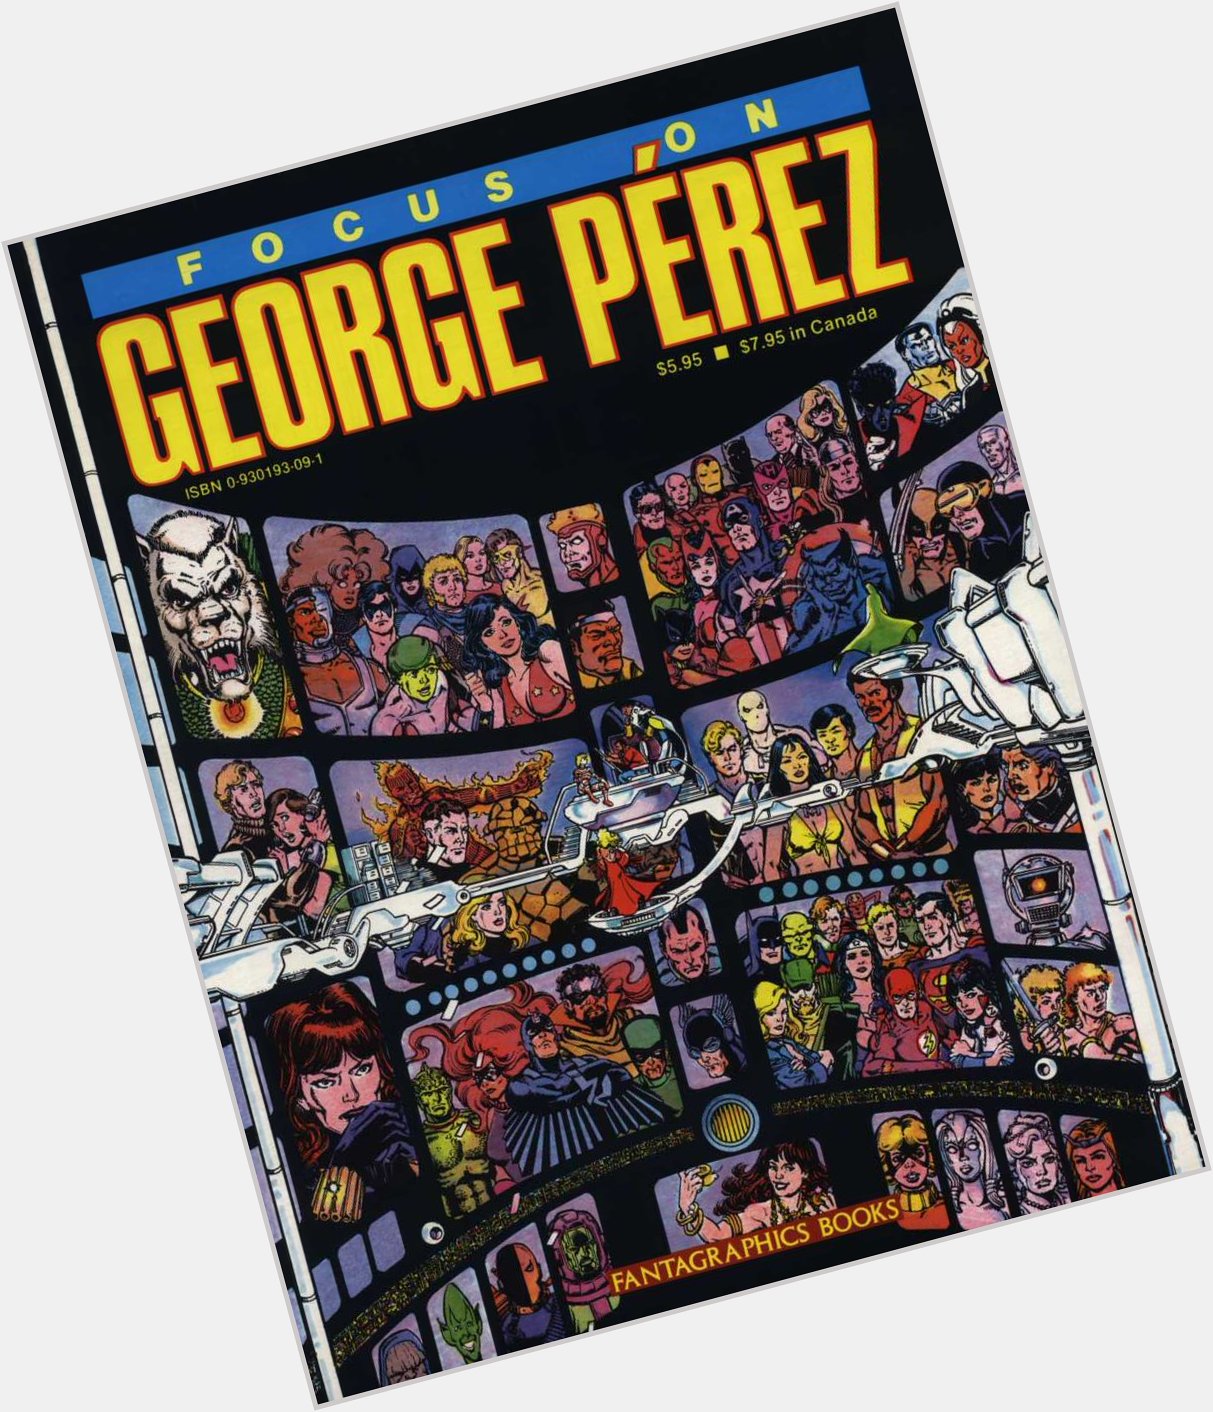 Happiest of birthdays to artist George Perez!   